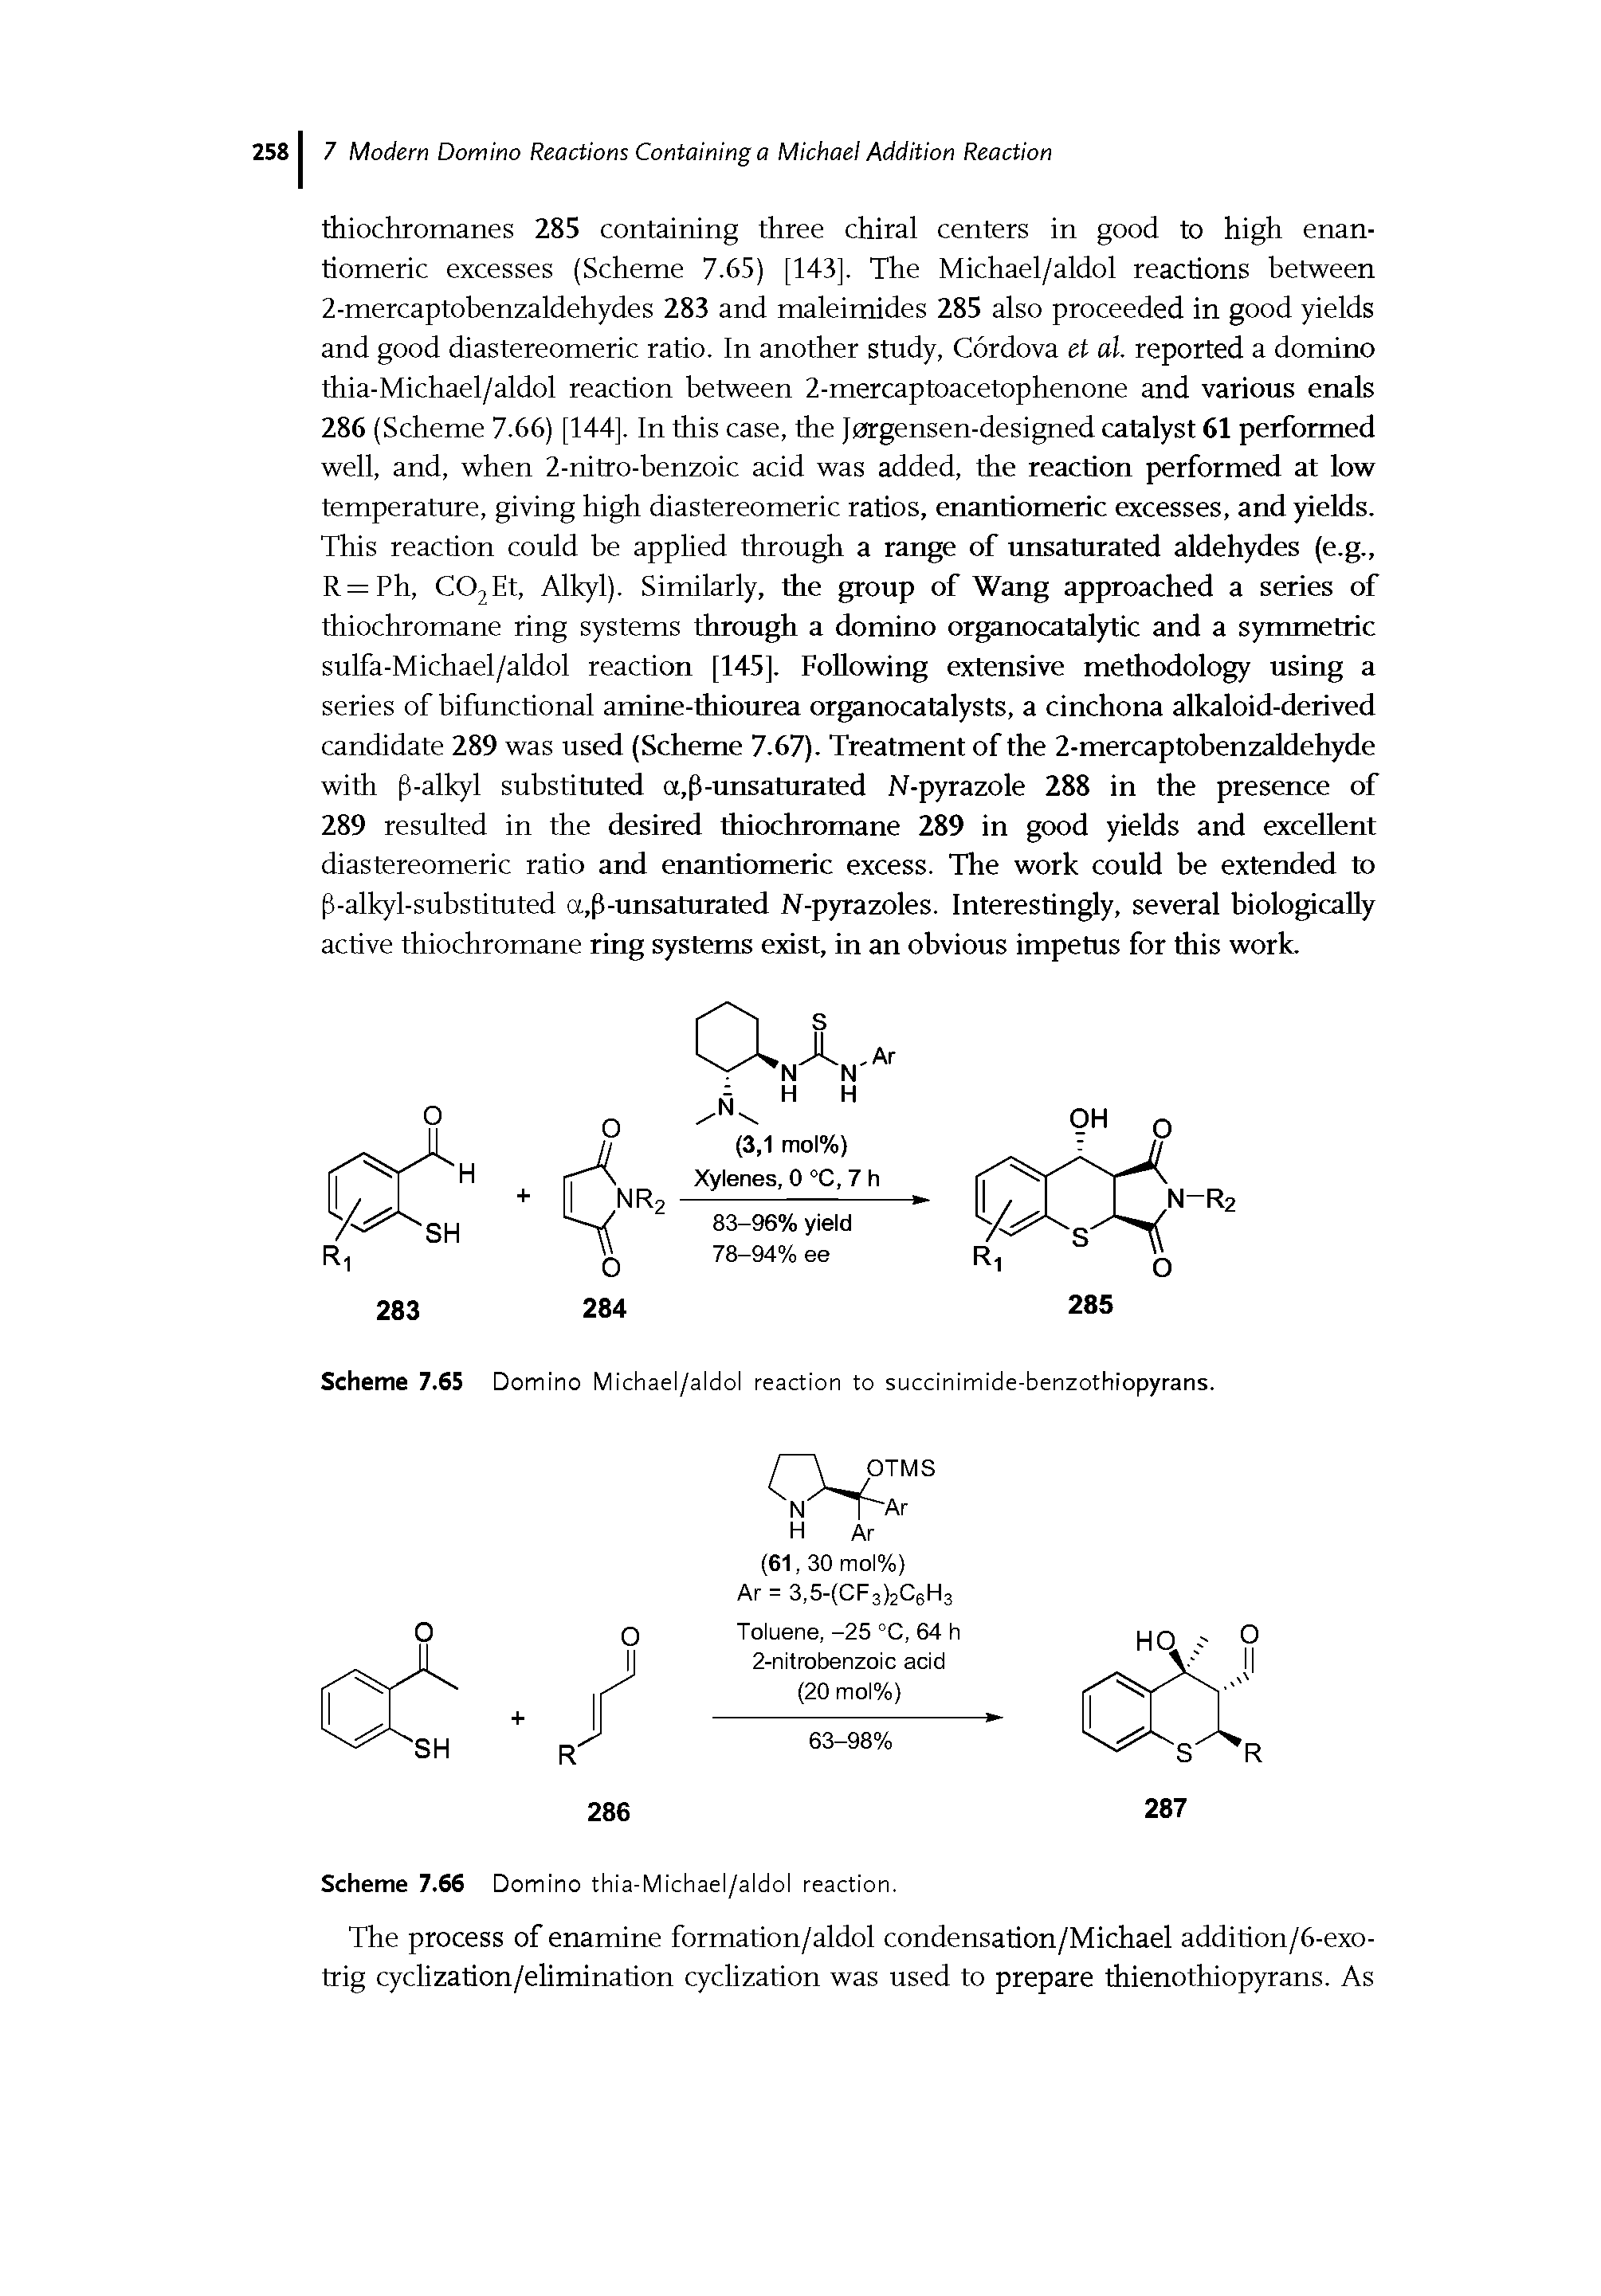 Scheme 7.66 Domino thia-Michael/aldol reaction.